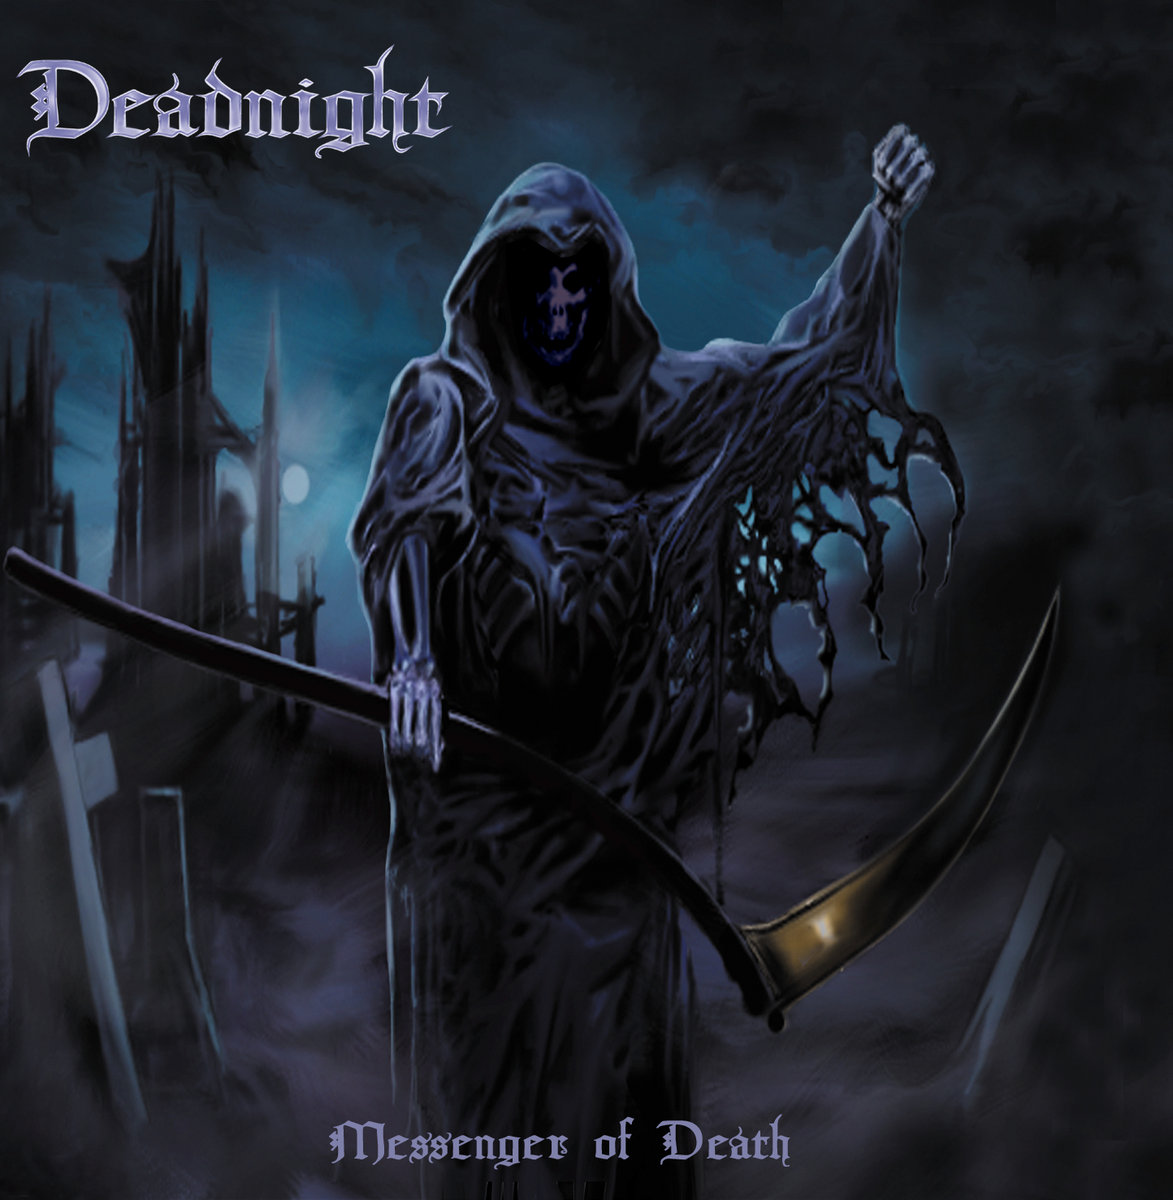 Deadnight – Messengers of Death